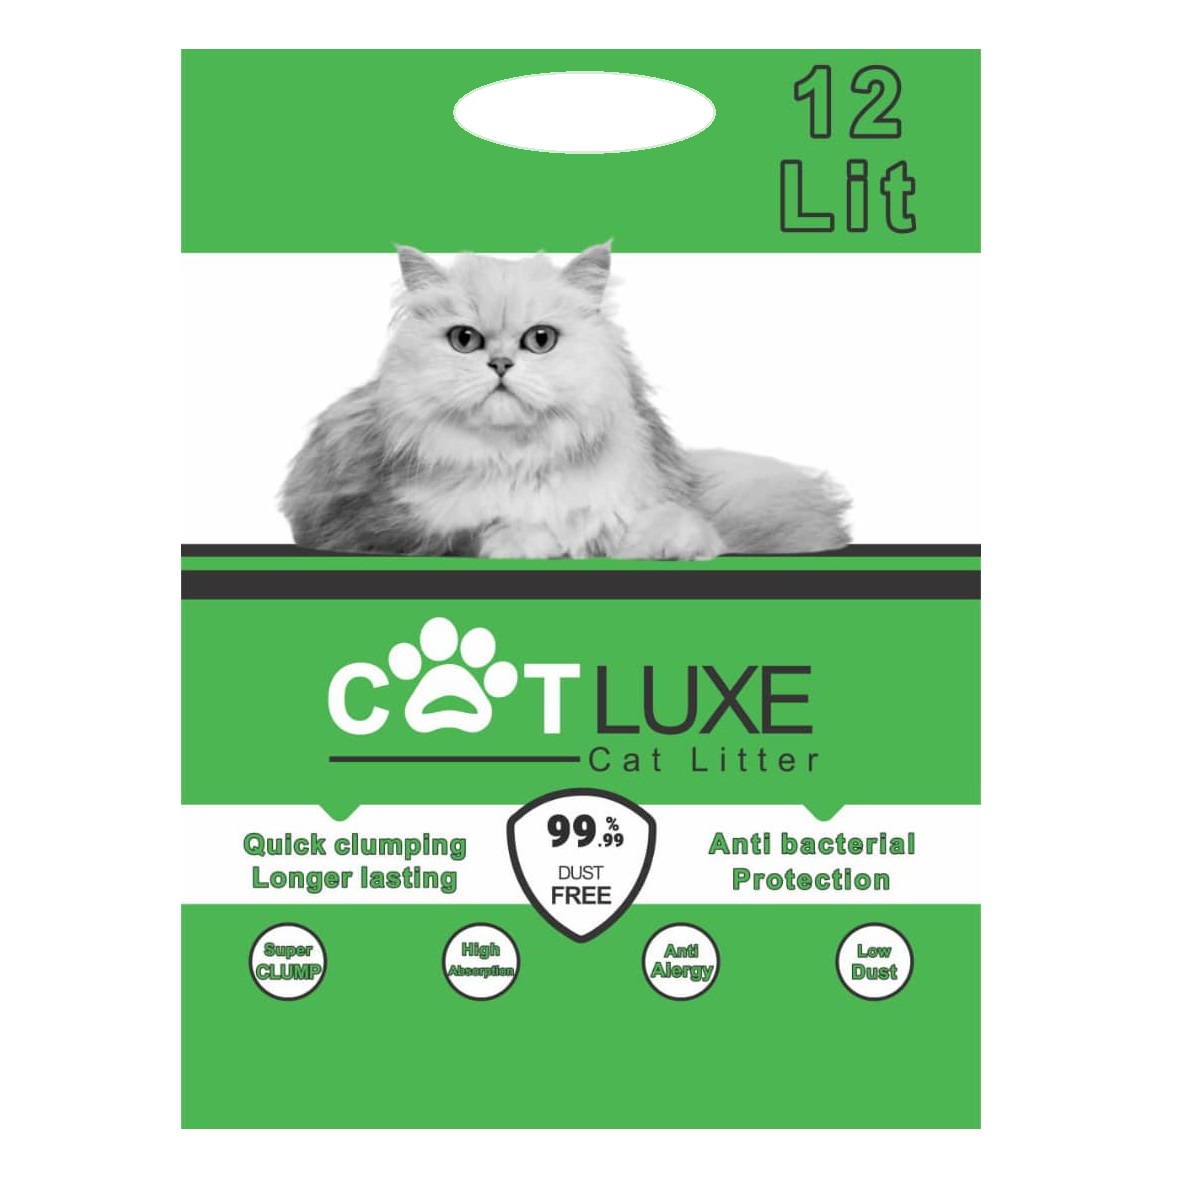 بهترین نژاد گربه - خاک گربه کت لوکس گرانول وزن 10 کیلوگرم